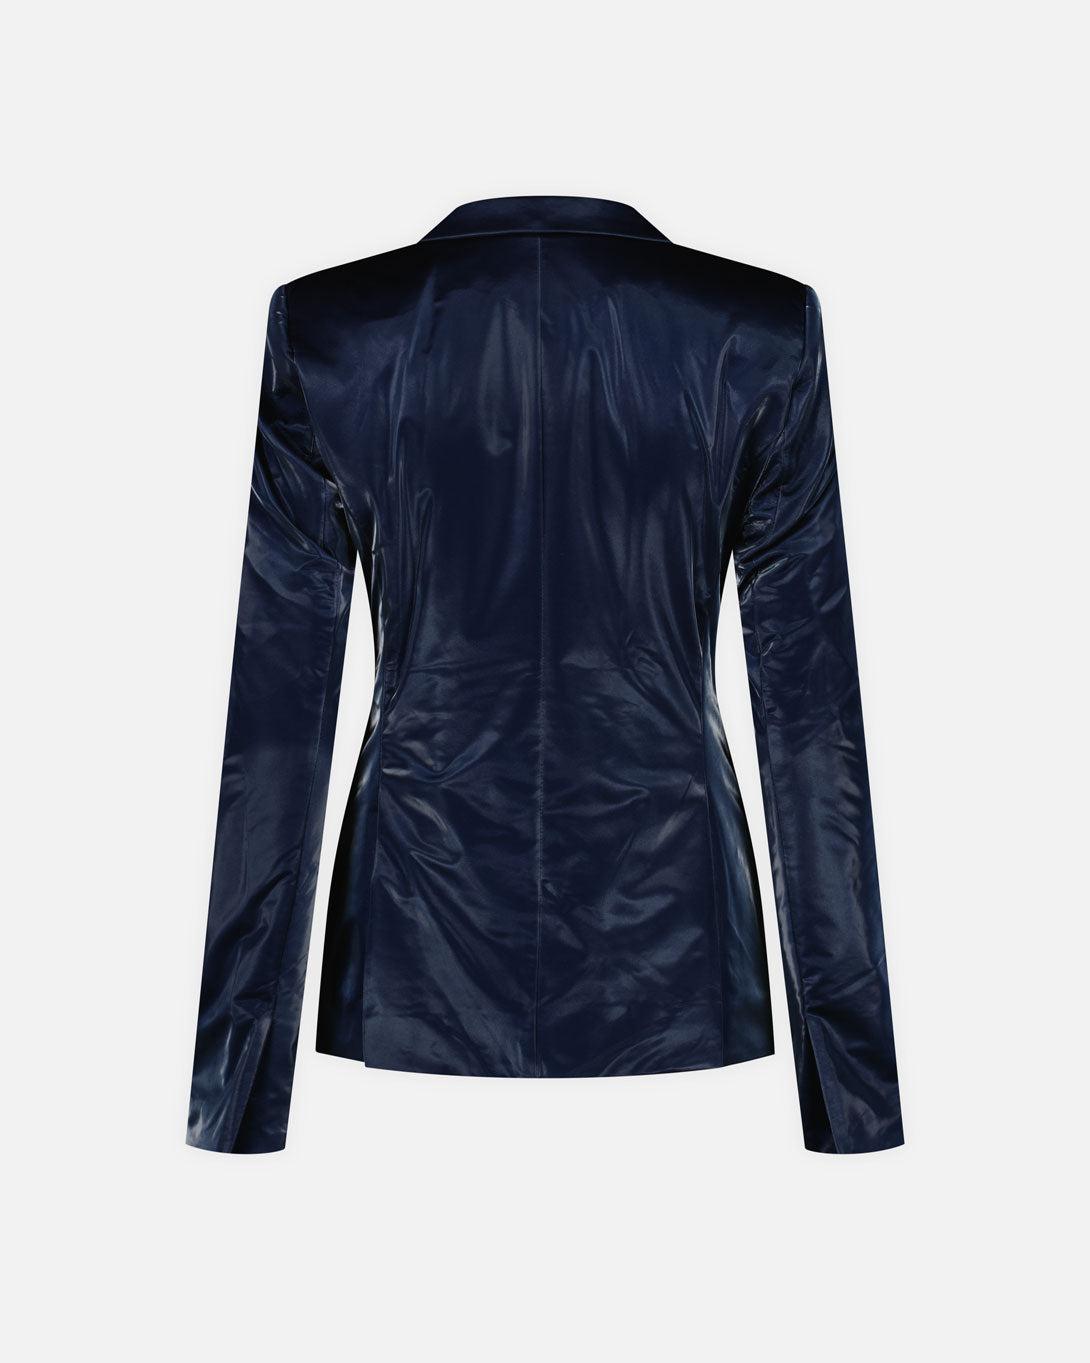 Shiny Fitted Harness Blazer - Coats & Jackets - Ottolinger - Elevastor